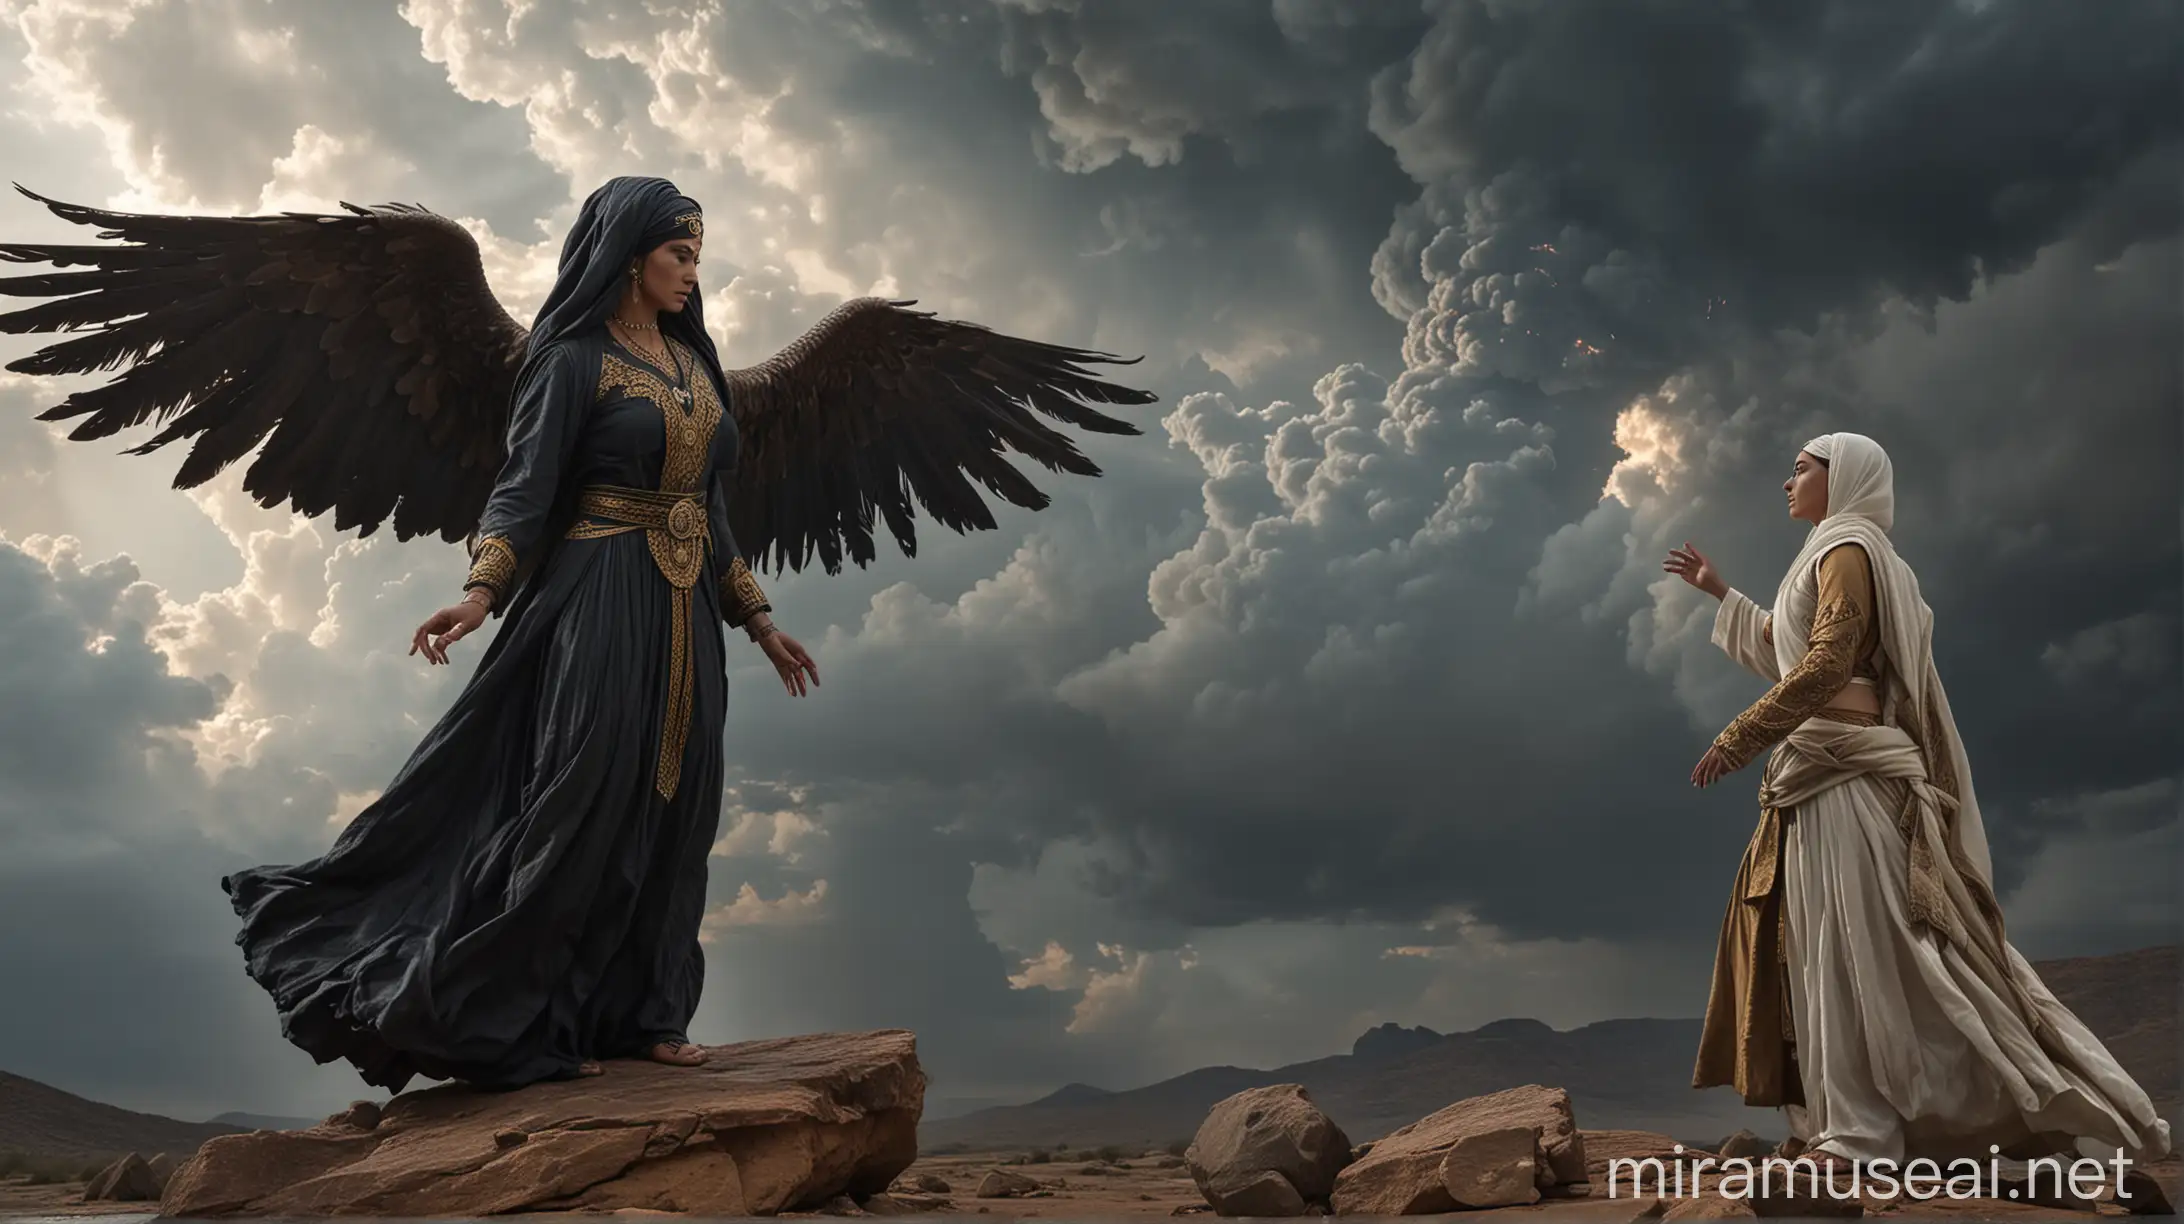 Arabian Warrior Confronts Divine Being in Intense Lightning Encounter